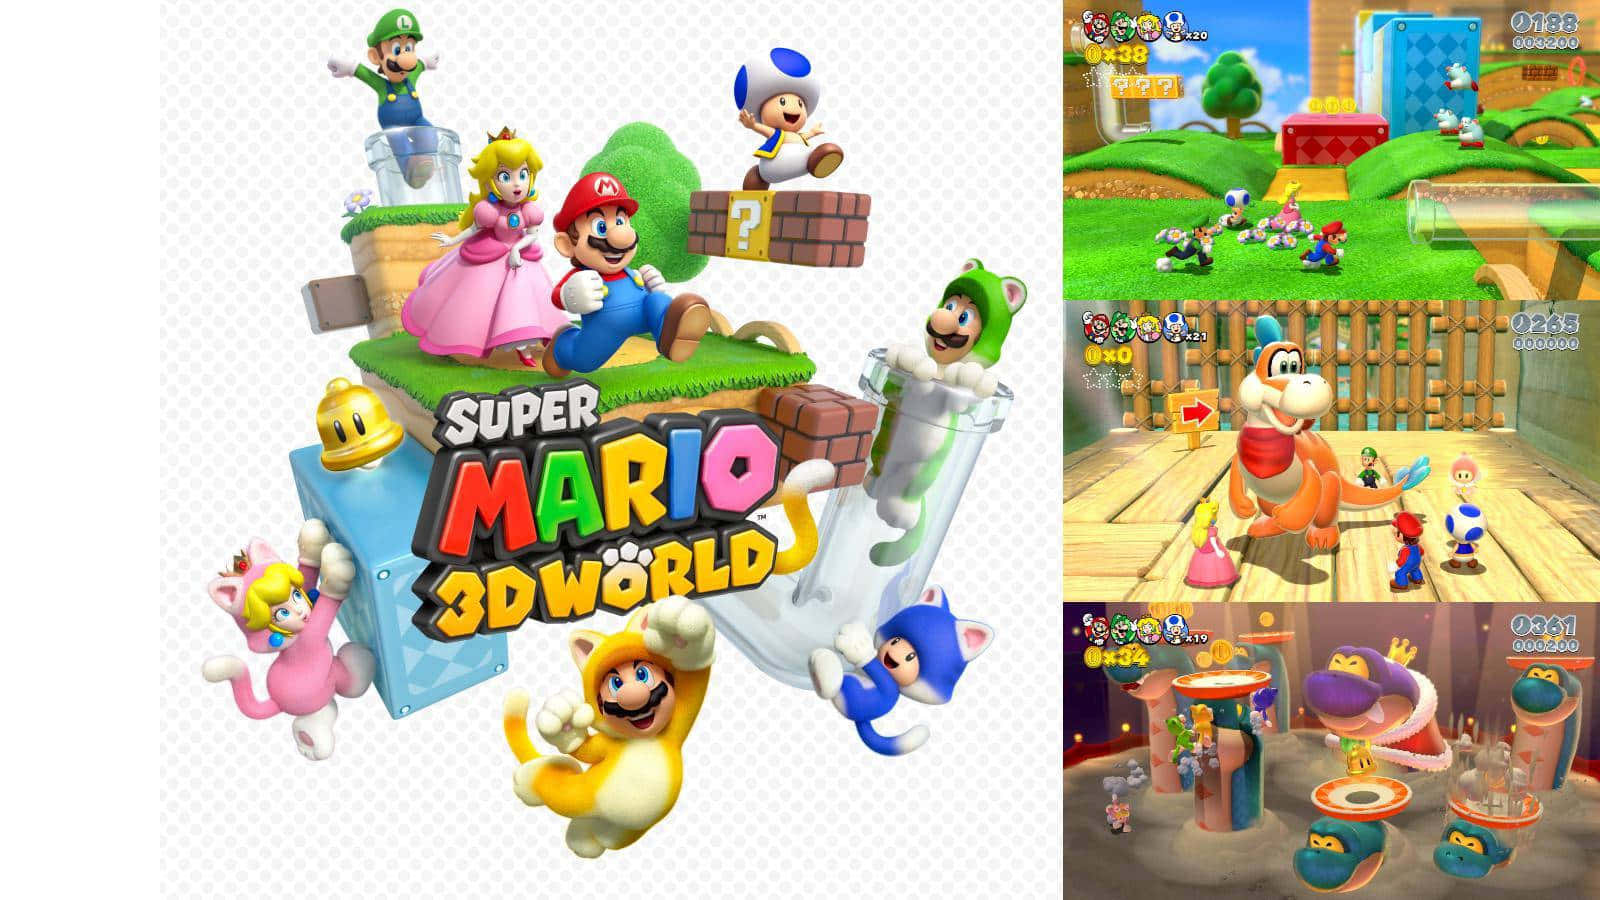 Supermario 3d World - Nintendo Nintendo Nintendo Nintendo Nintendo Wallpaper